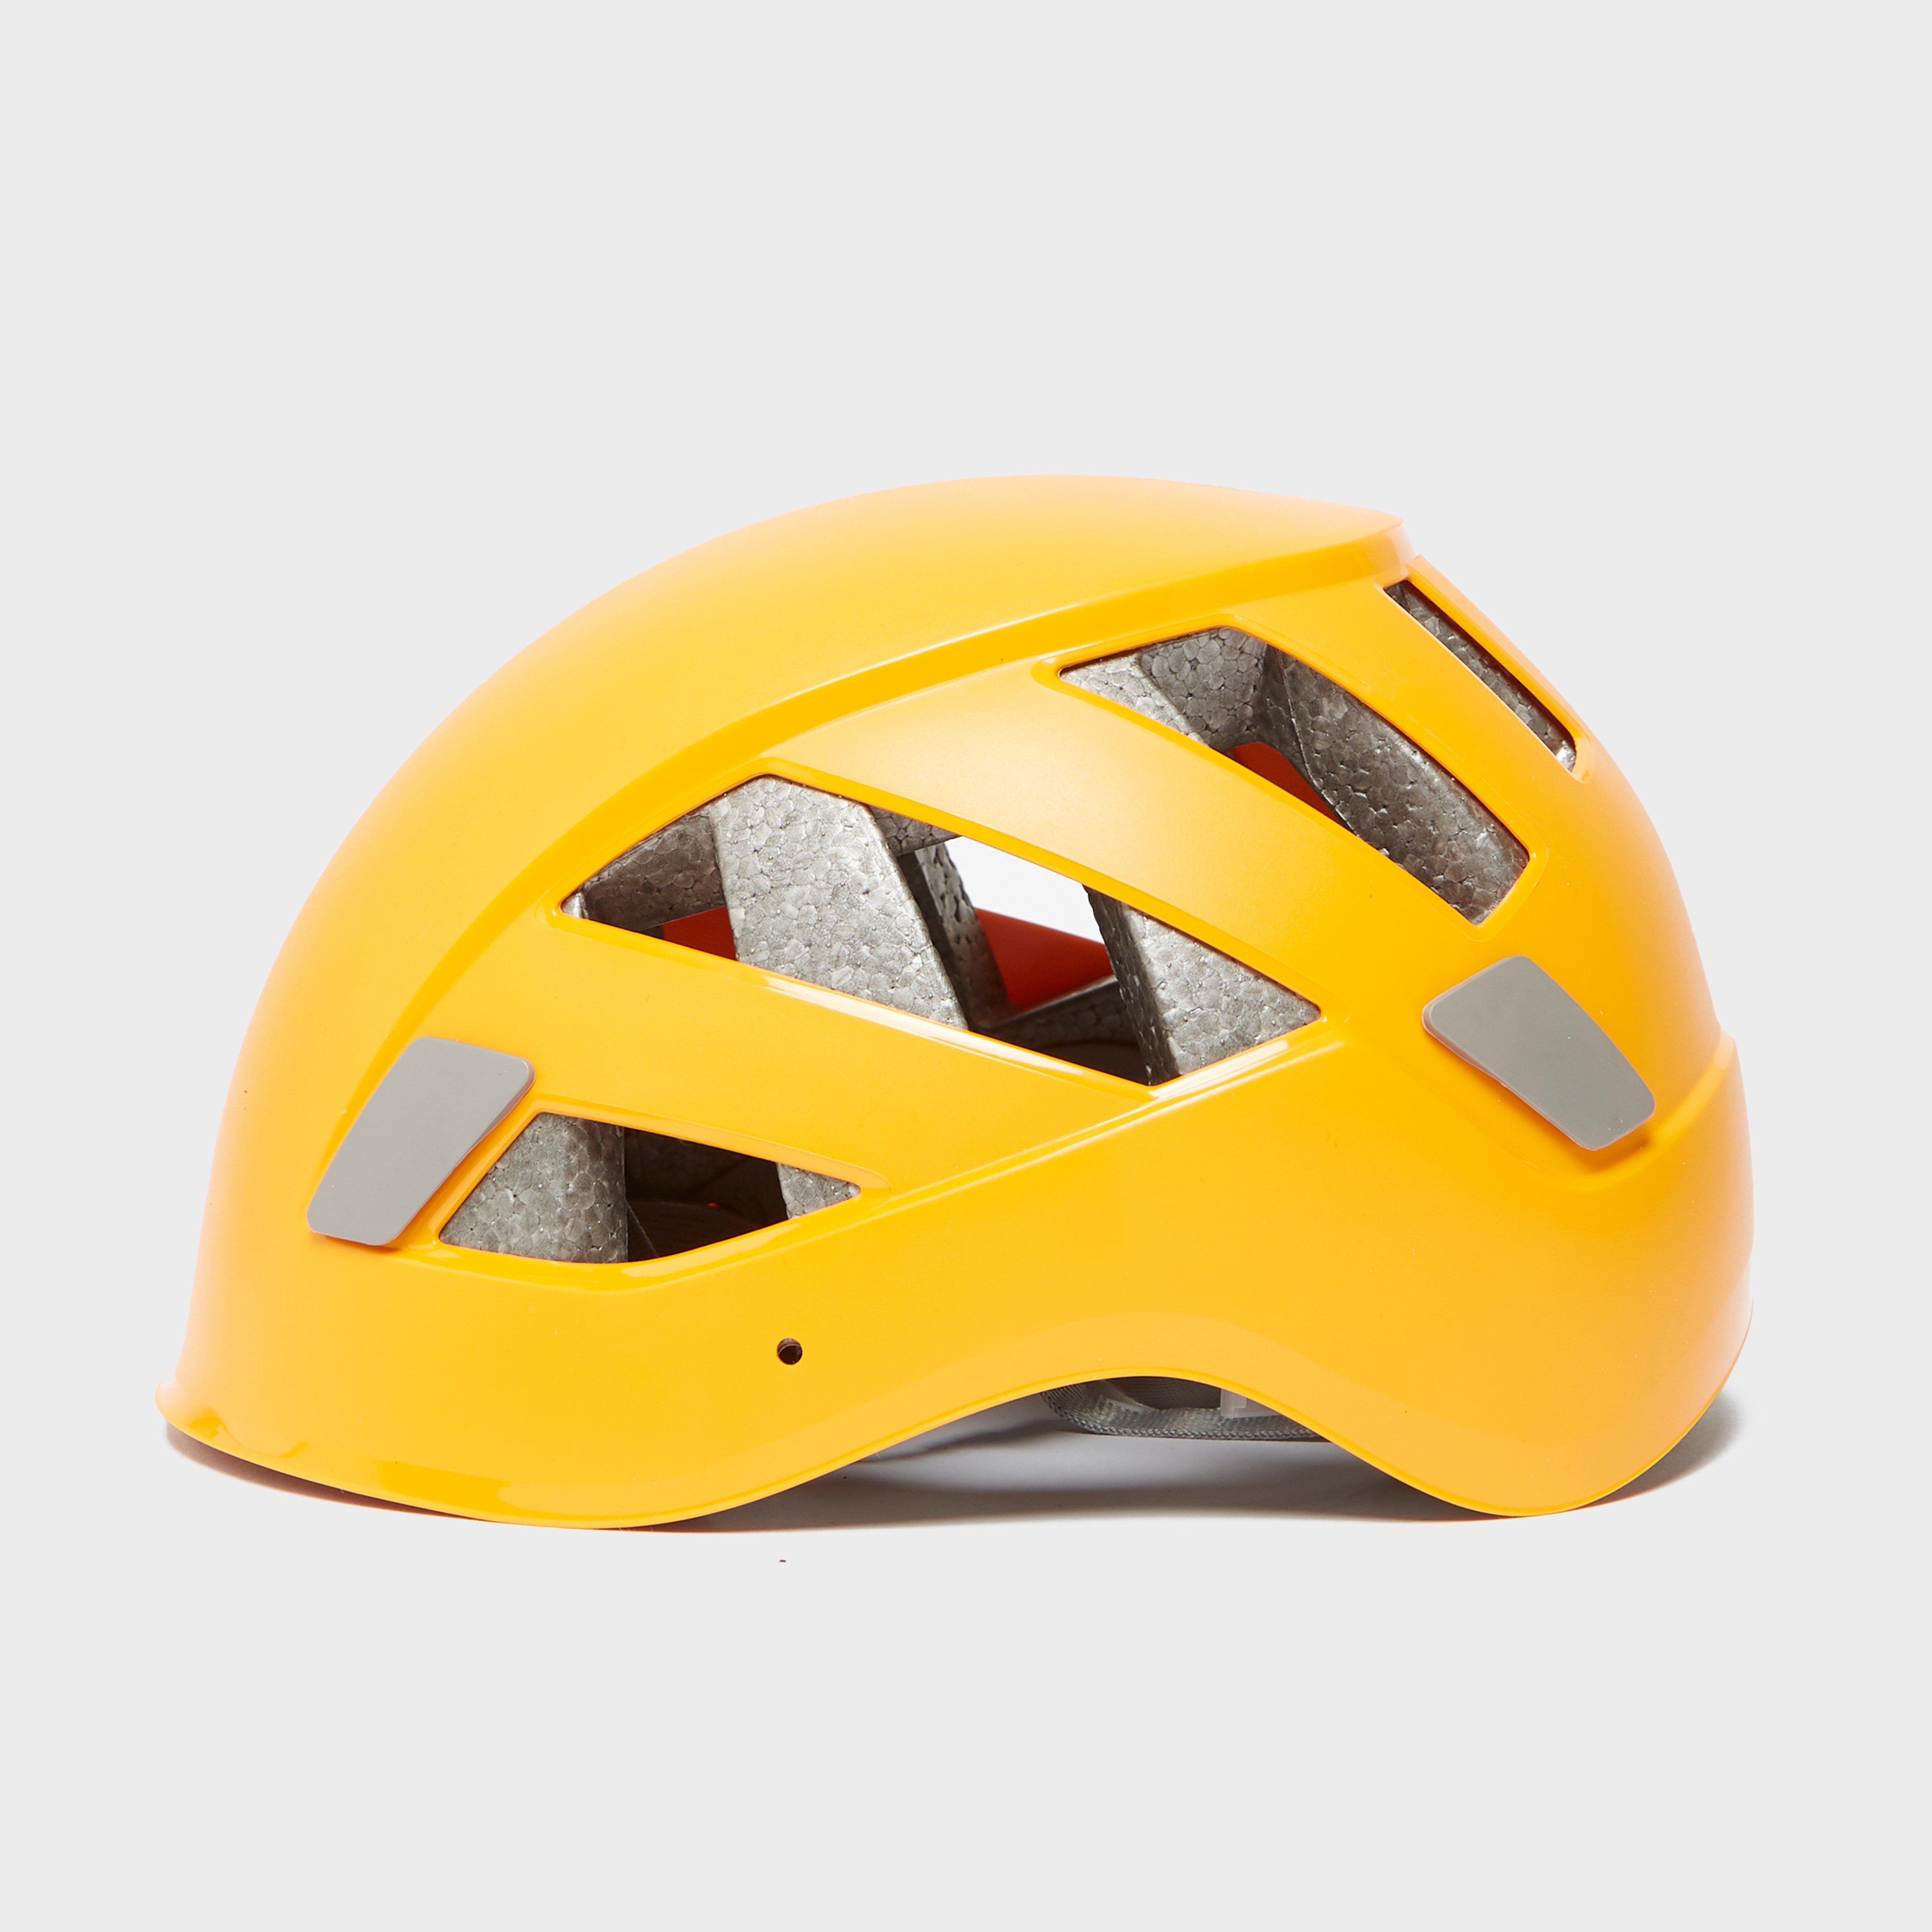 Petzl Boreo Climbing Helmet Review